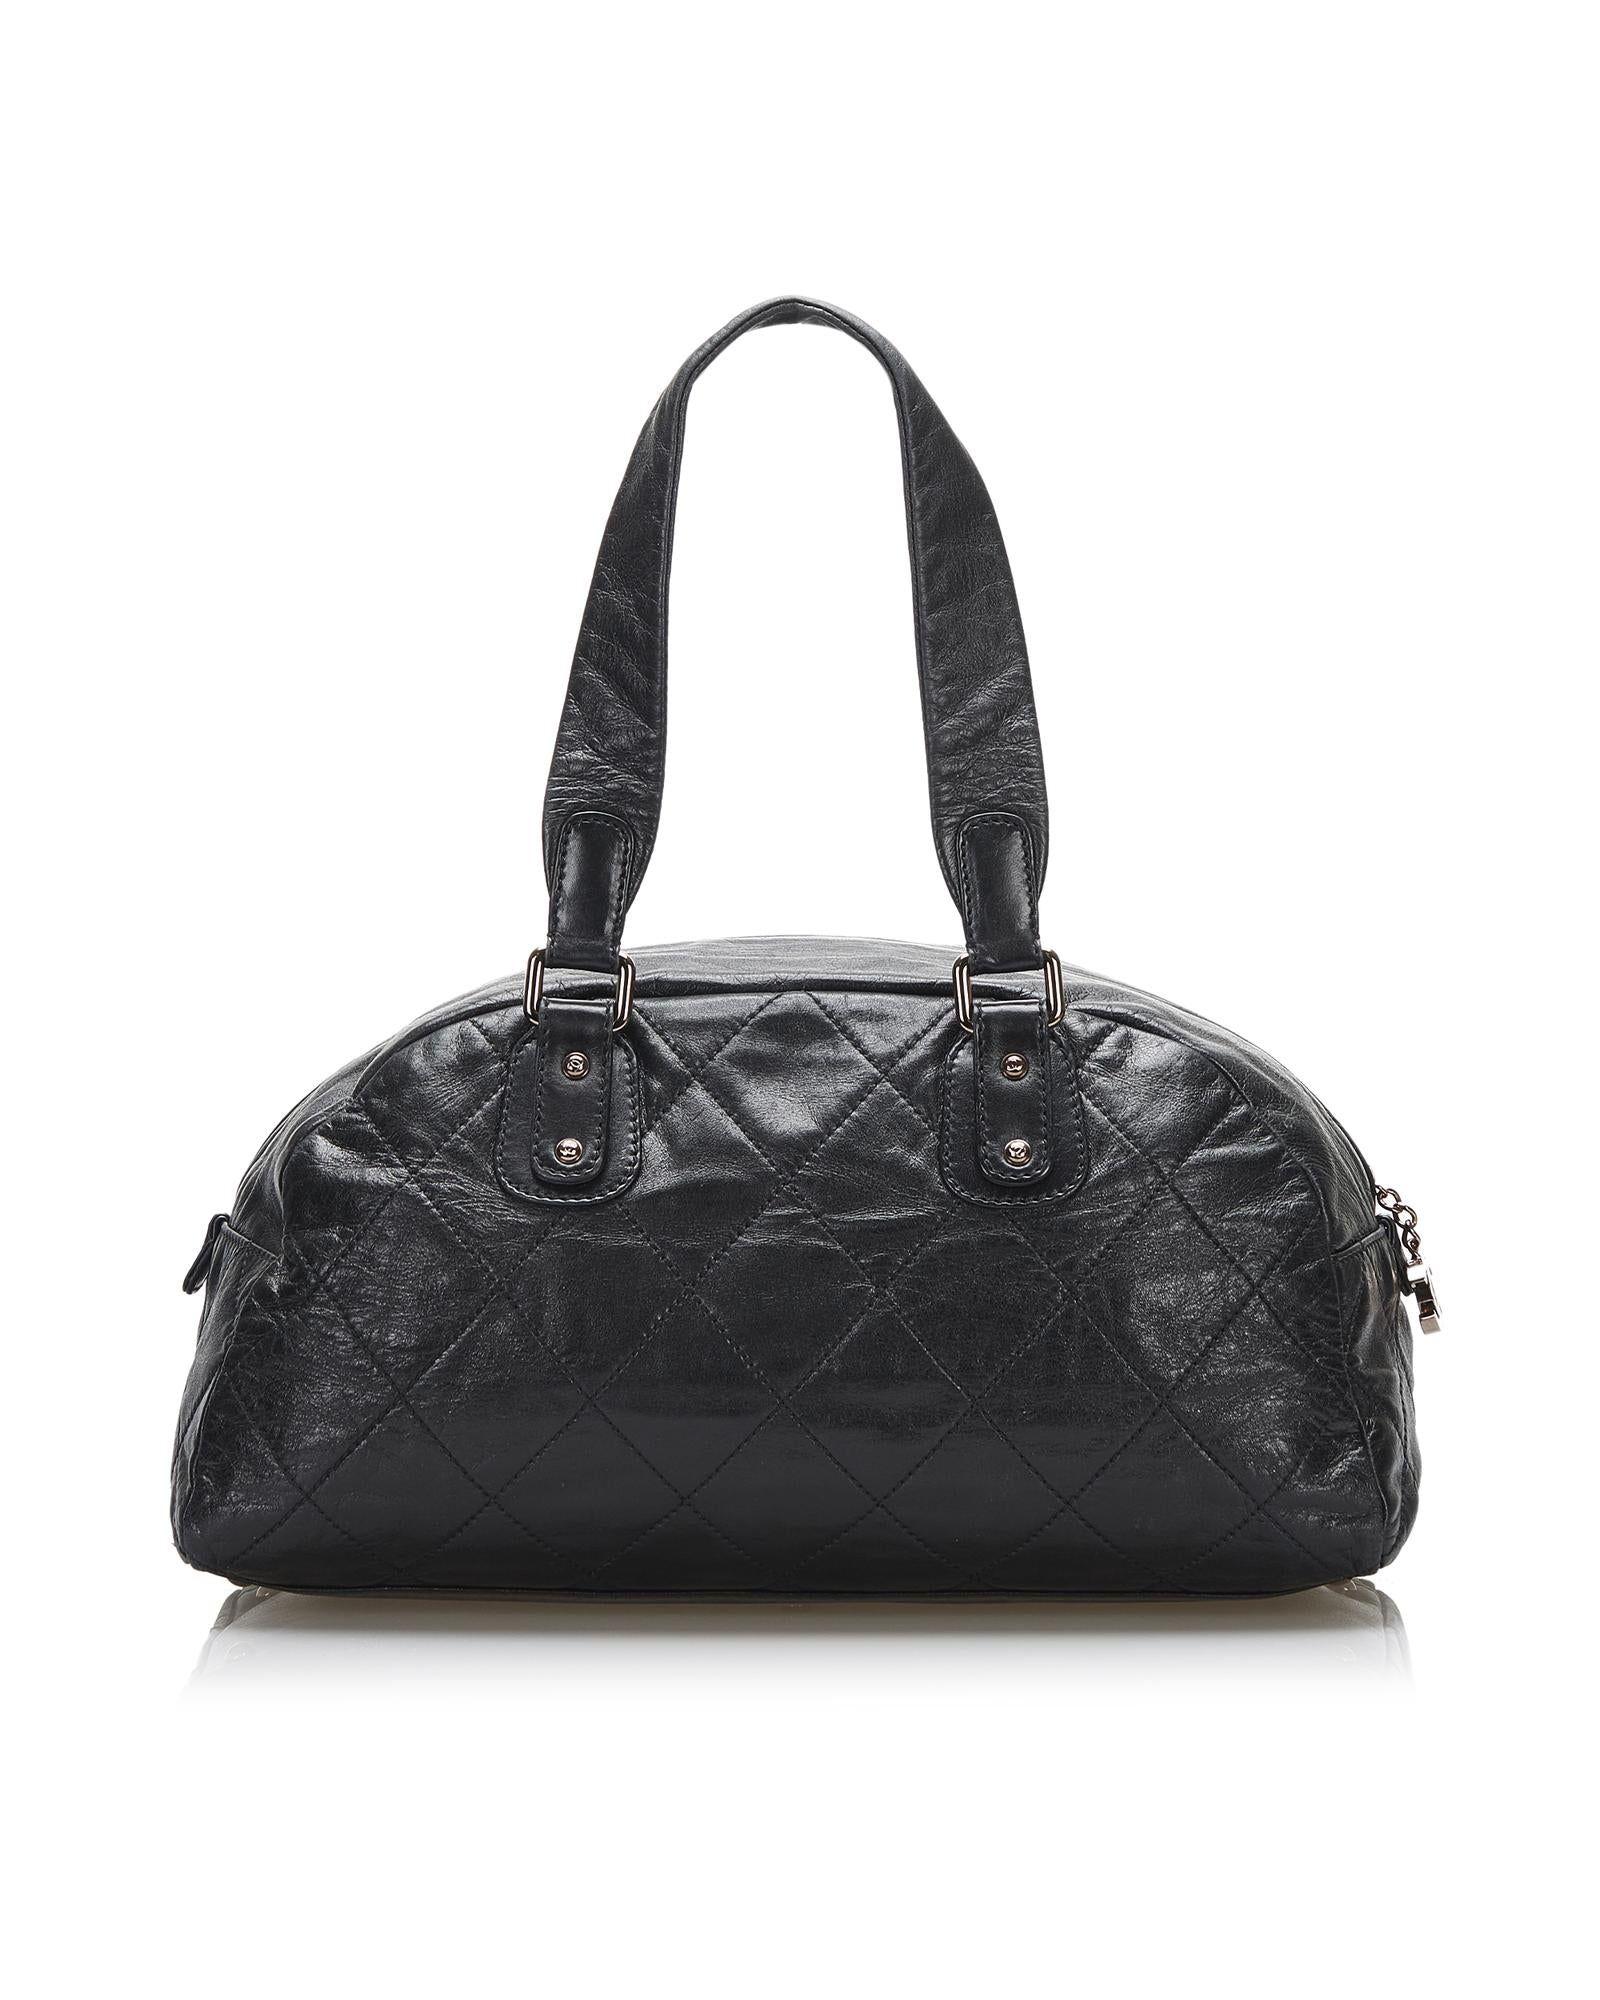 Chanel Lambskin Quilted Bowler Handbag in Black